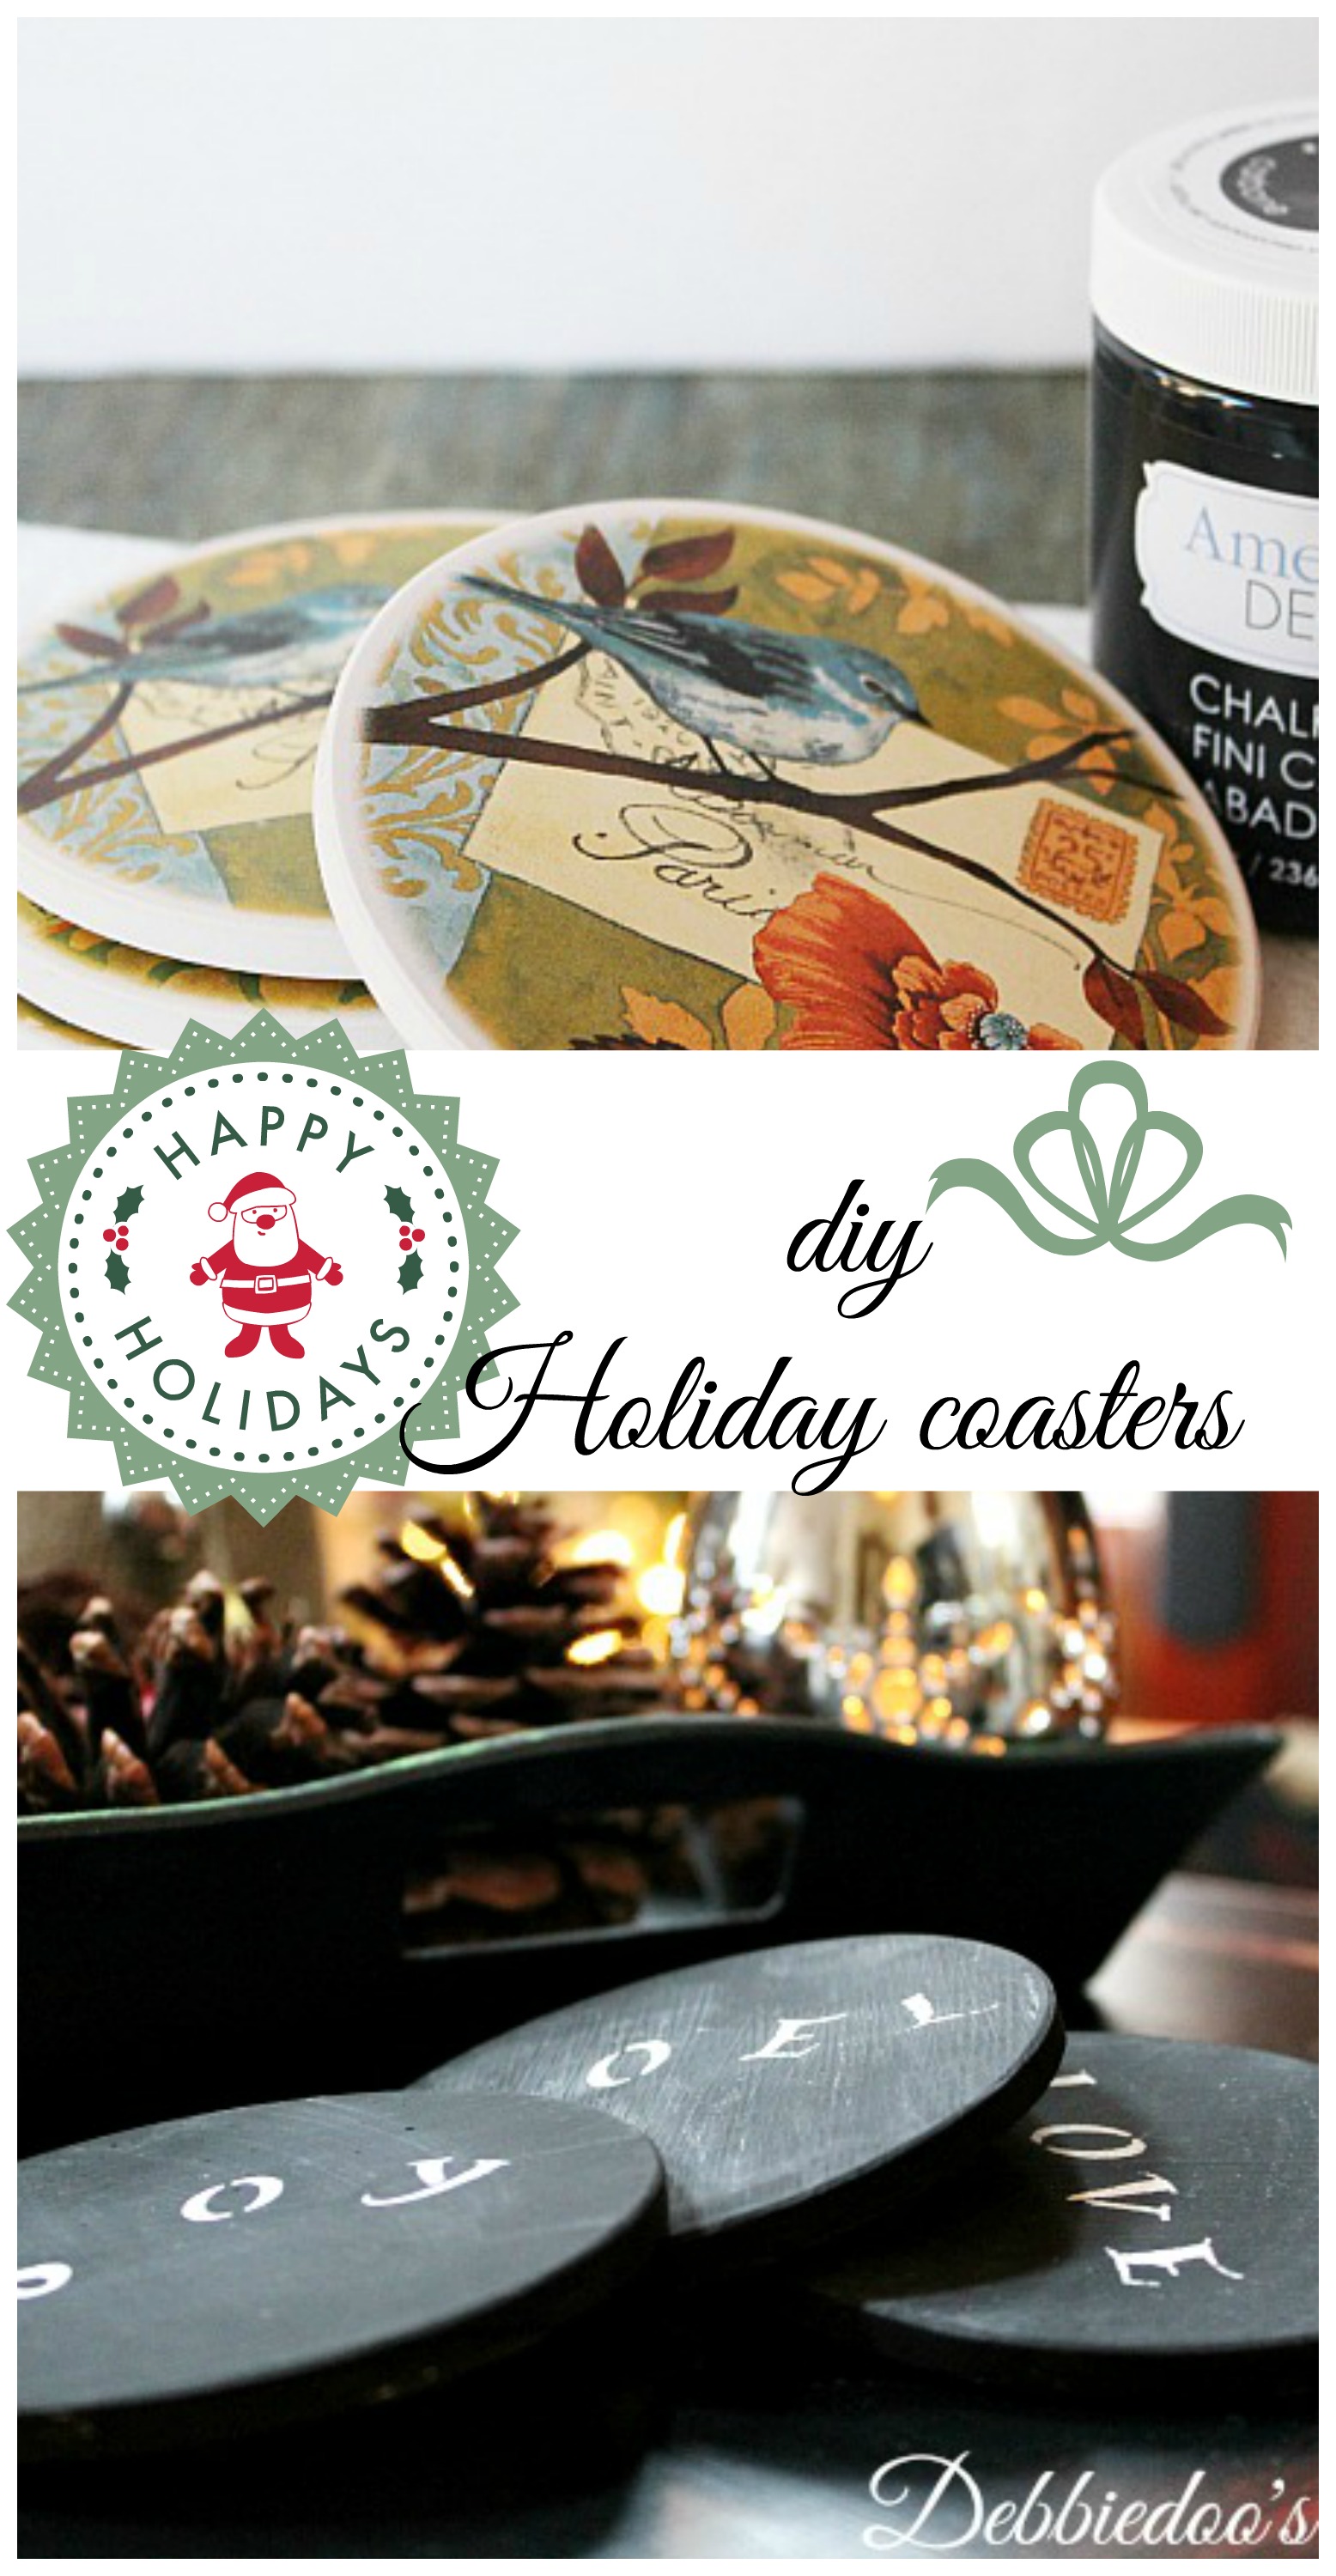 diy holiday chalkpainted coasters